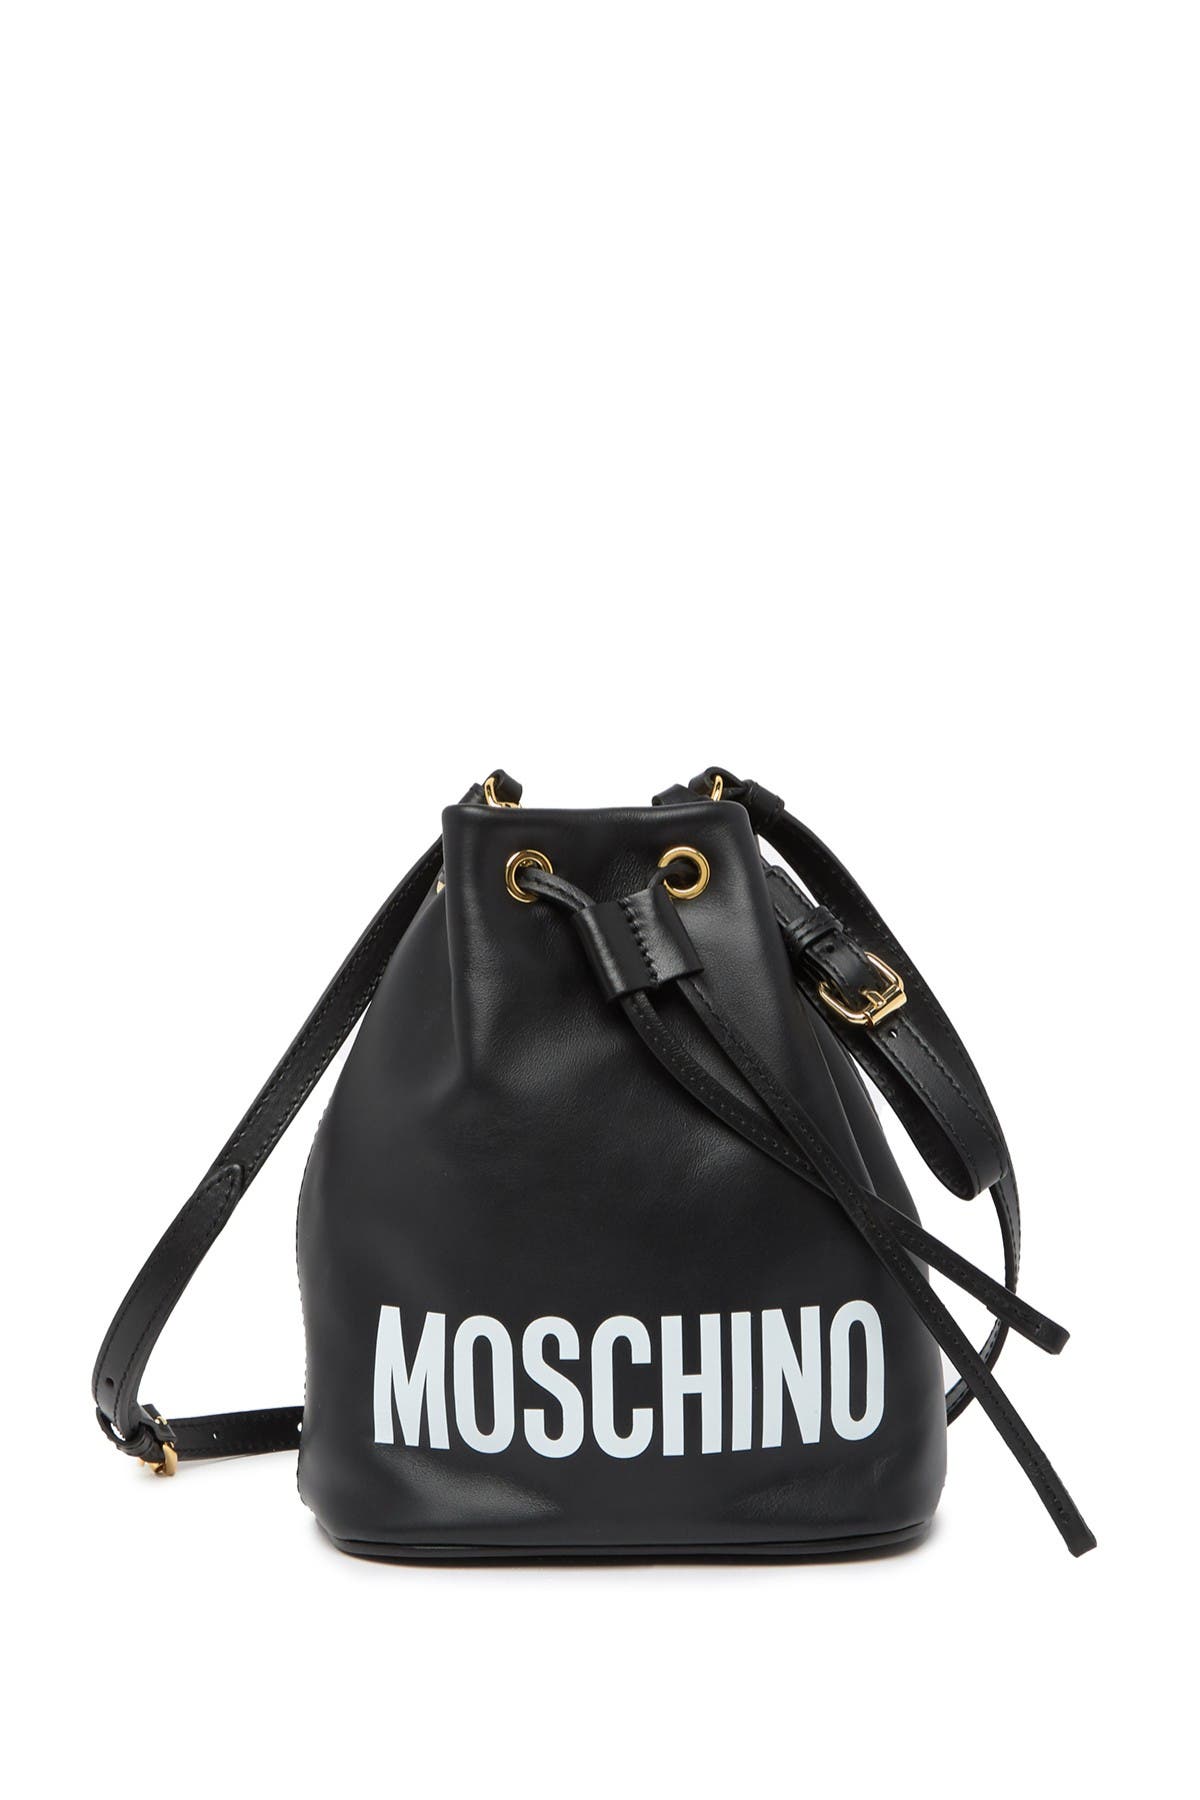 moschino leather handbag